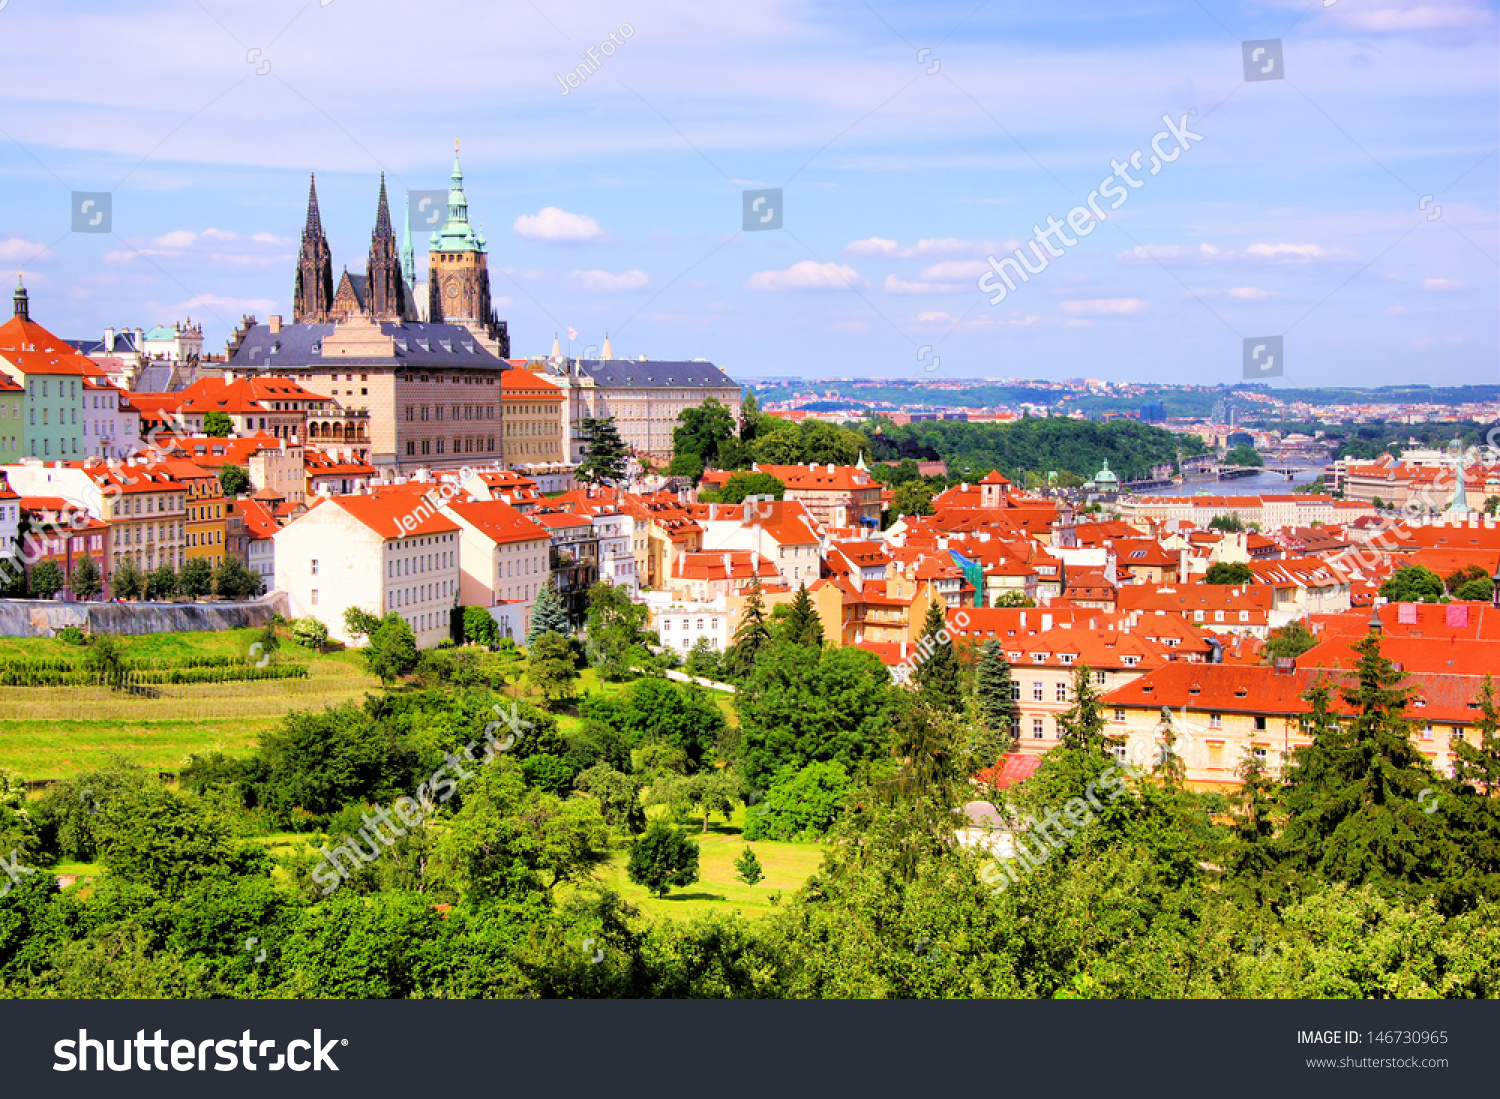 View over historic center of Prague with castle, Czech Republic #146730965